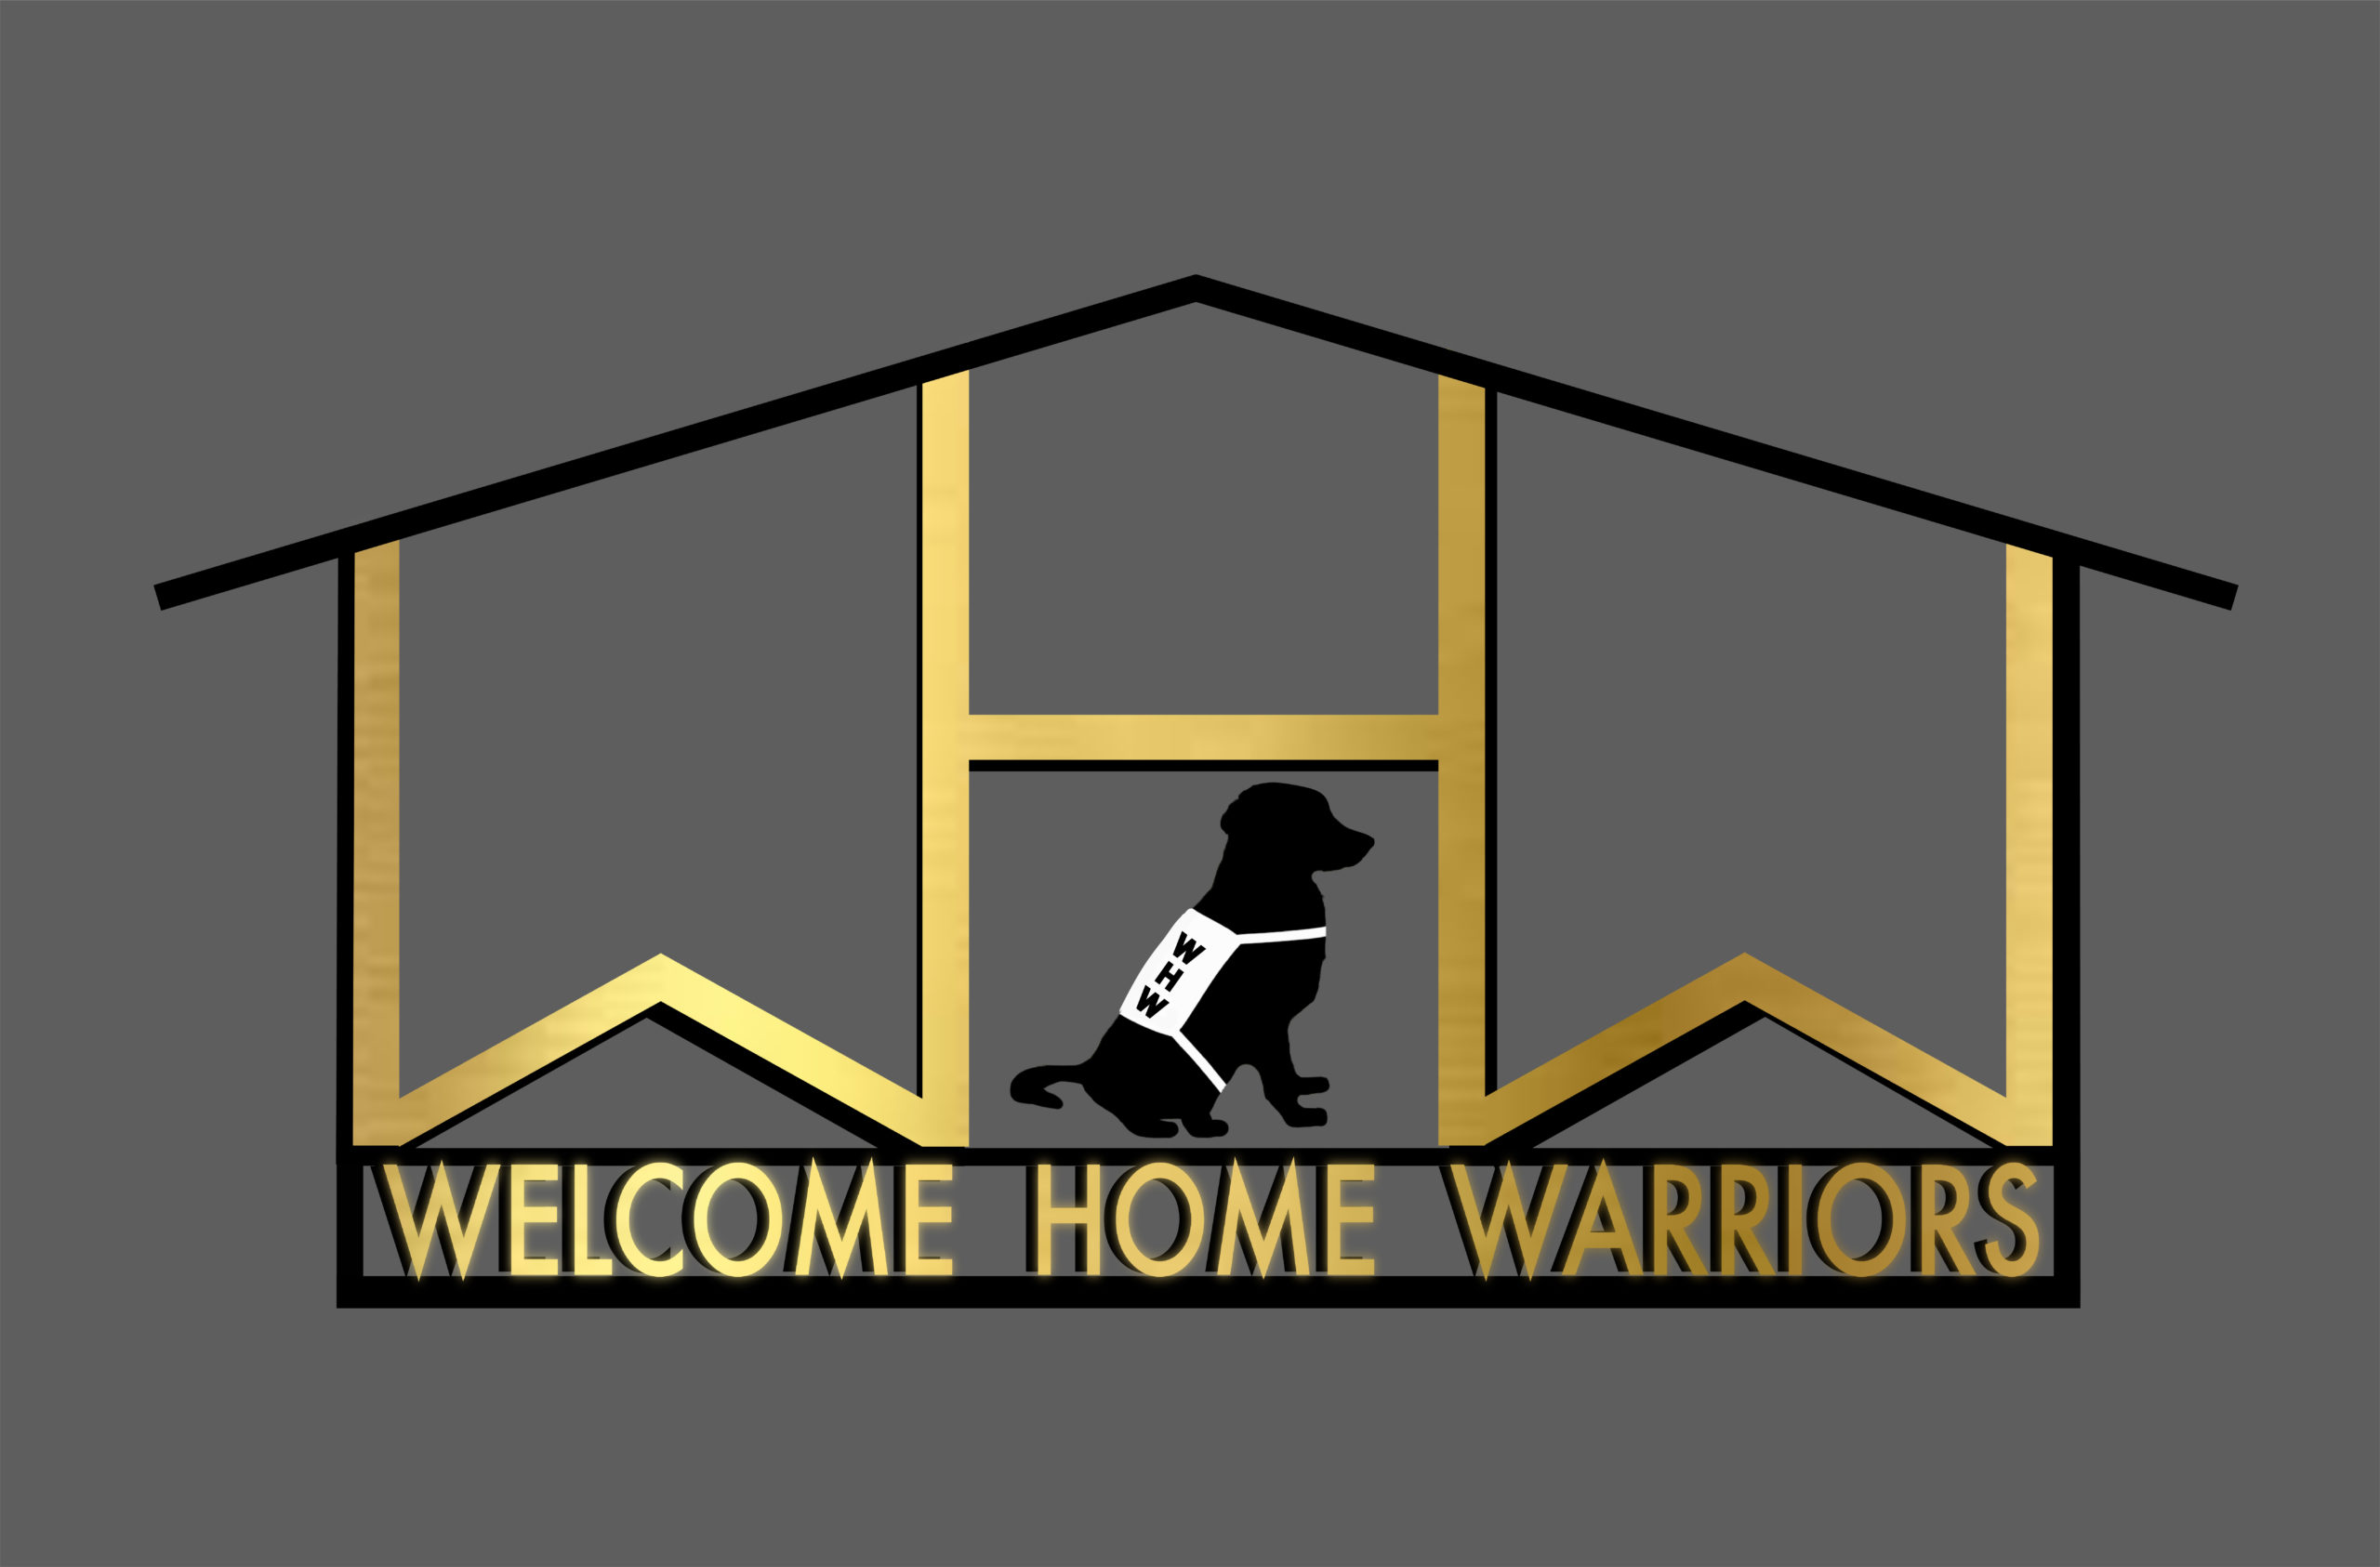 welcome home warriors logo design oneofakind marketing and graphic design branding graphics brand advertising freelance design virginia beach, norfolk, chesapeake, hampton roads, virginia